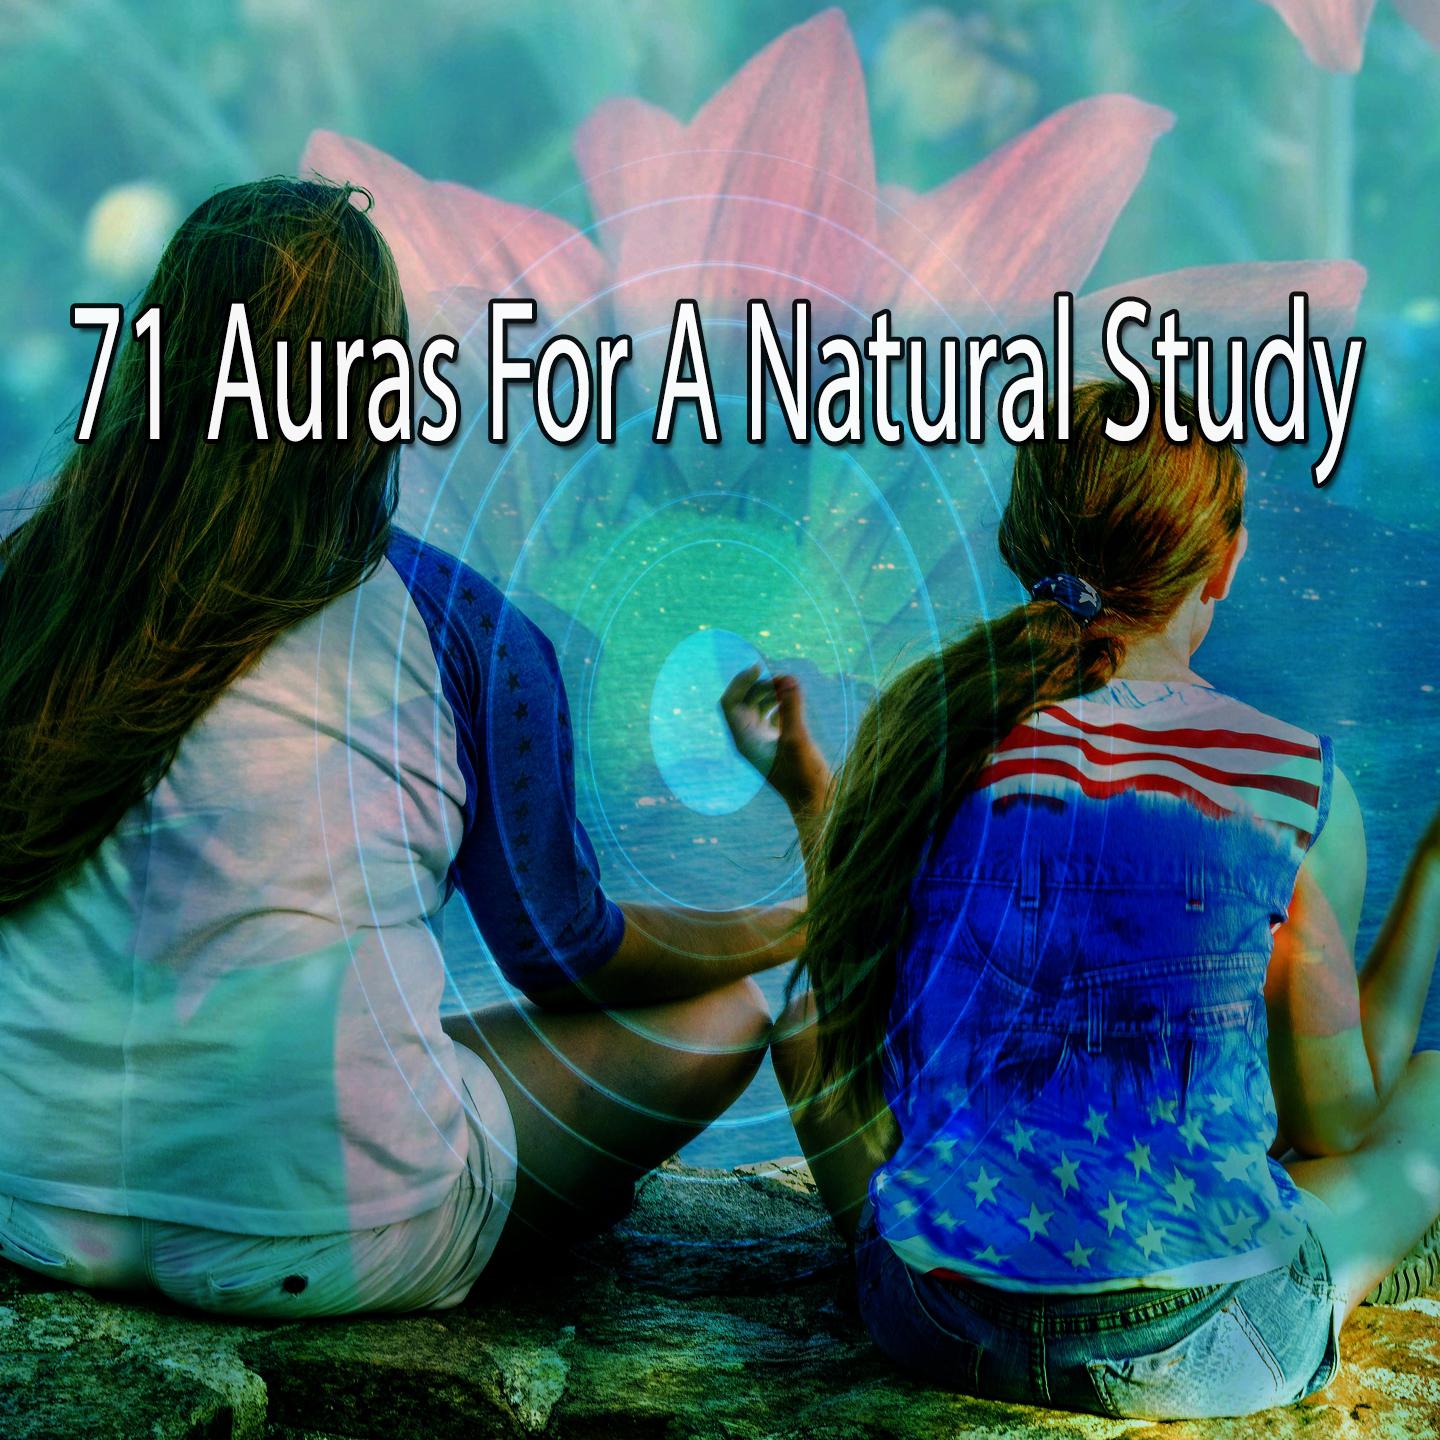 71 Auras for a Natural Study